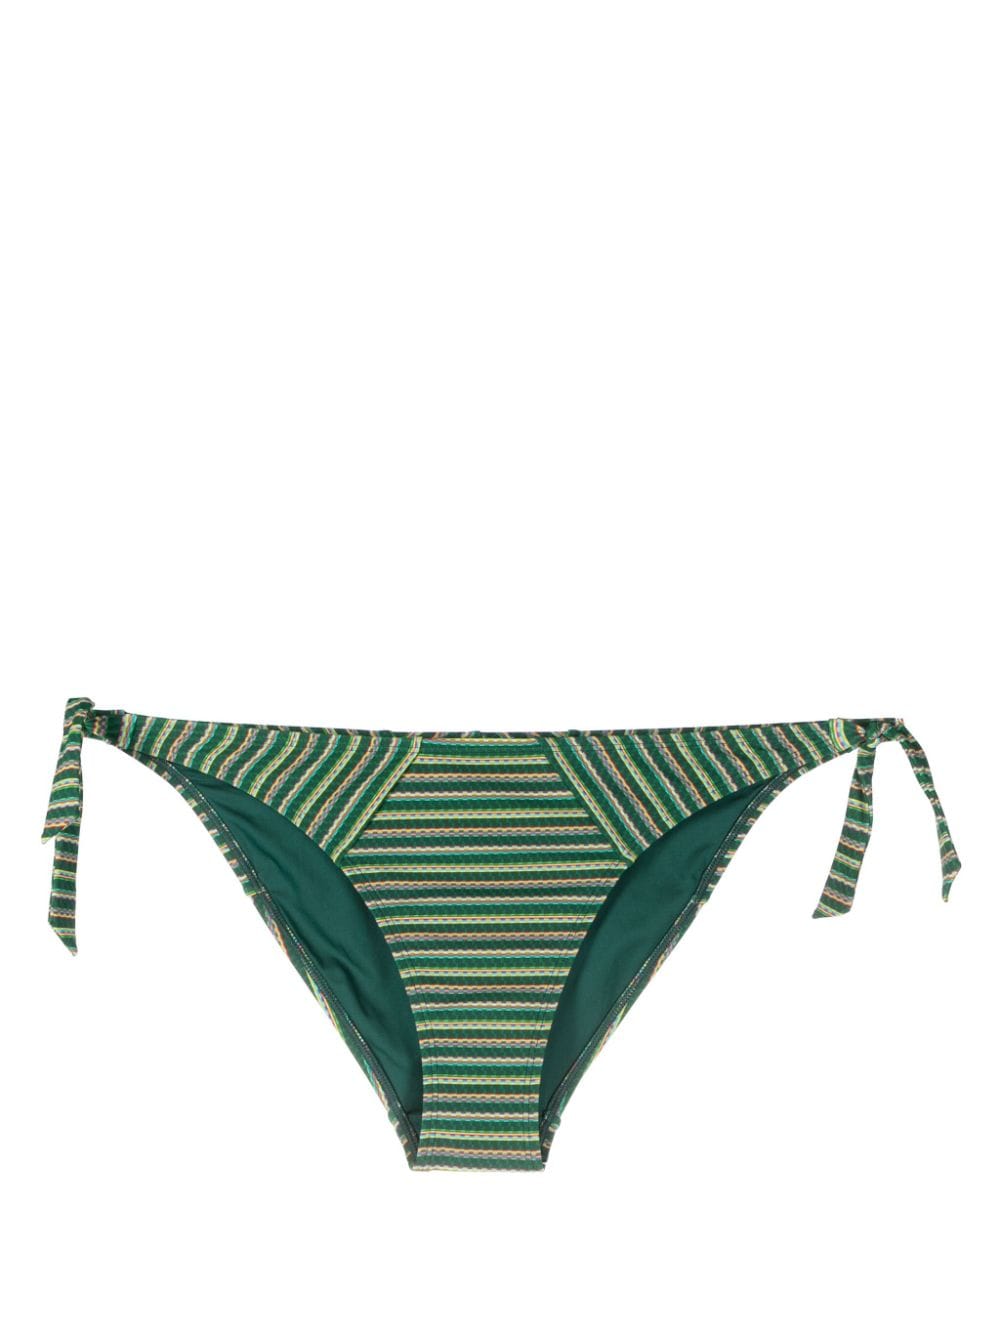 Marlies Dekkers Holi Vintage striped bikini bottoms - Green von Marlies Dekkers